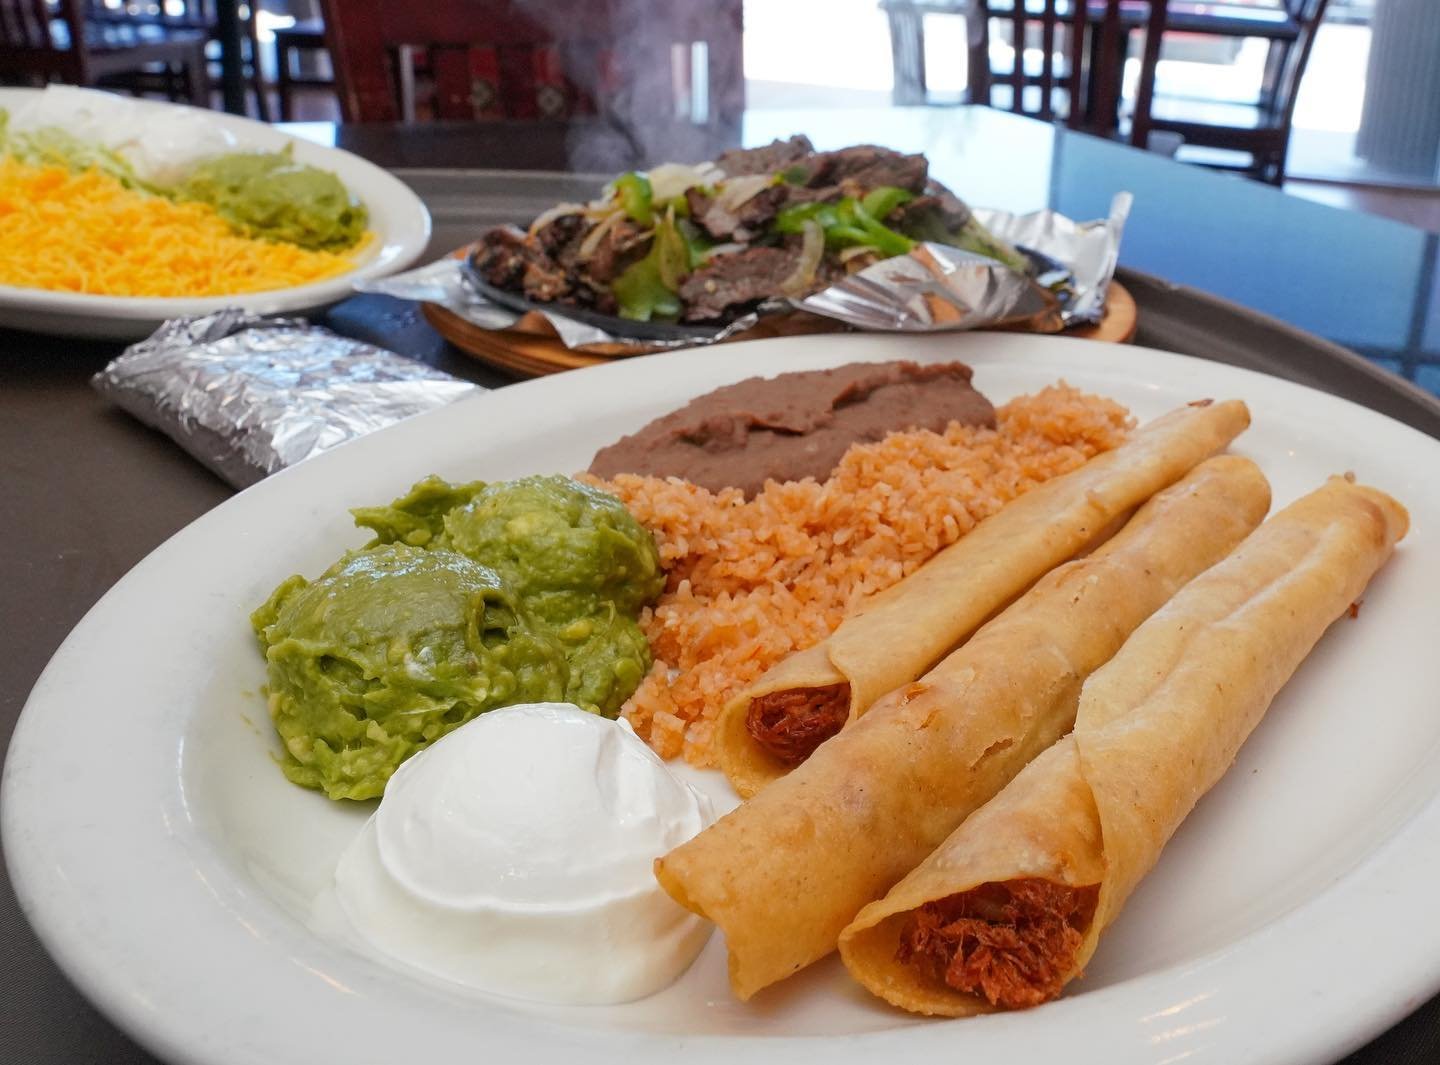 Casa Garcia's Mexican Restaurant & Cantina